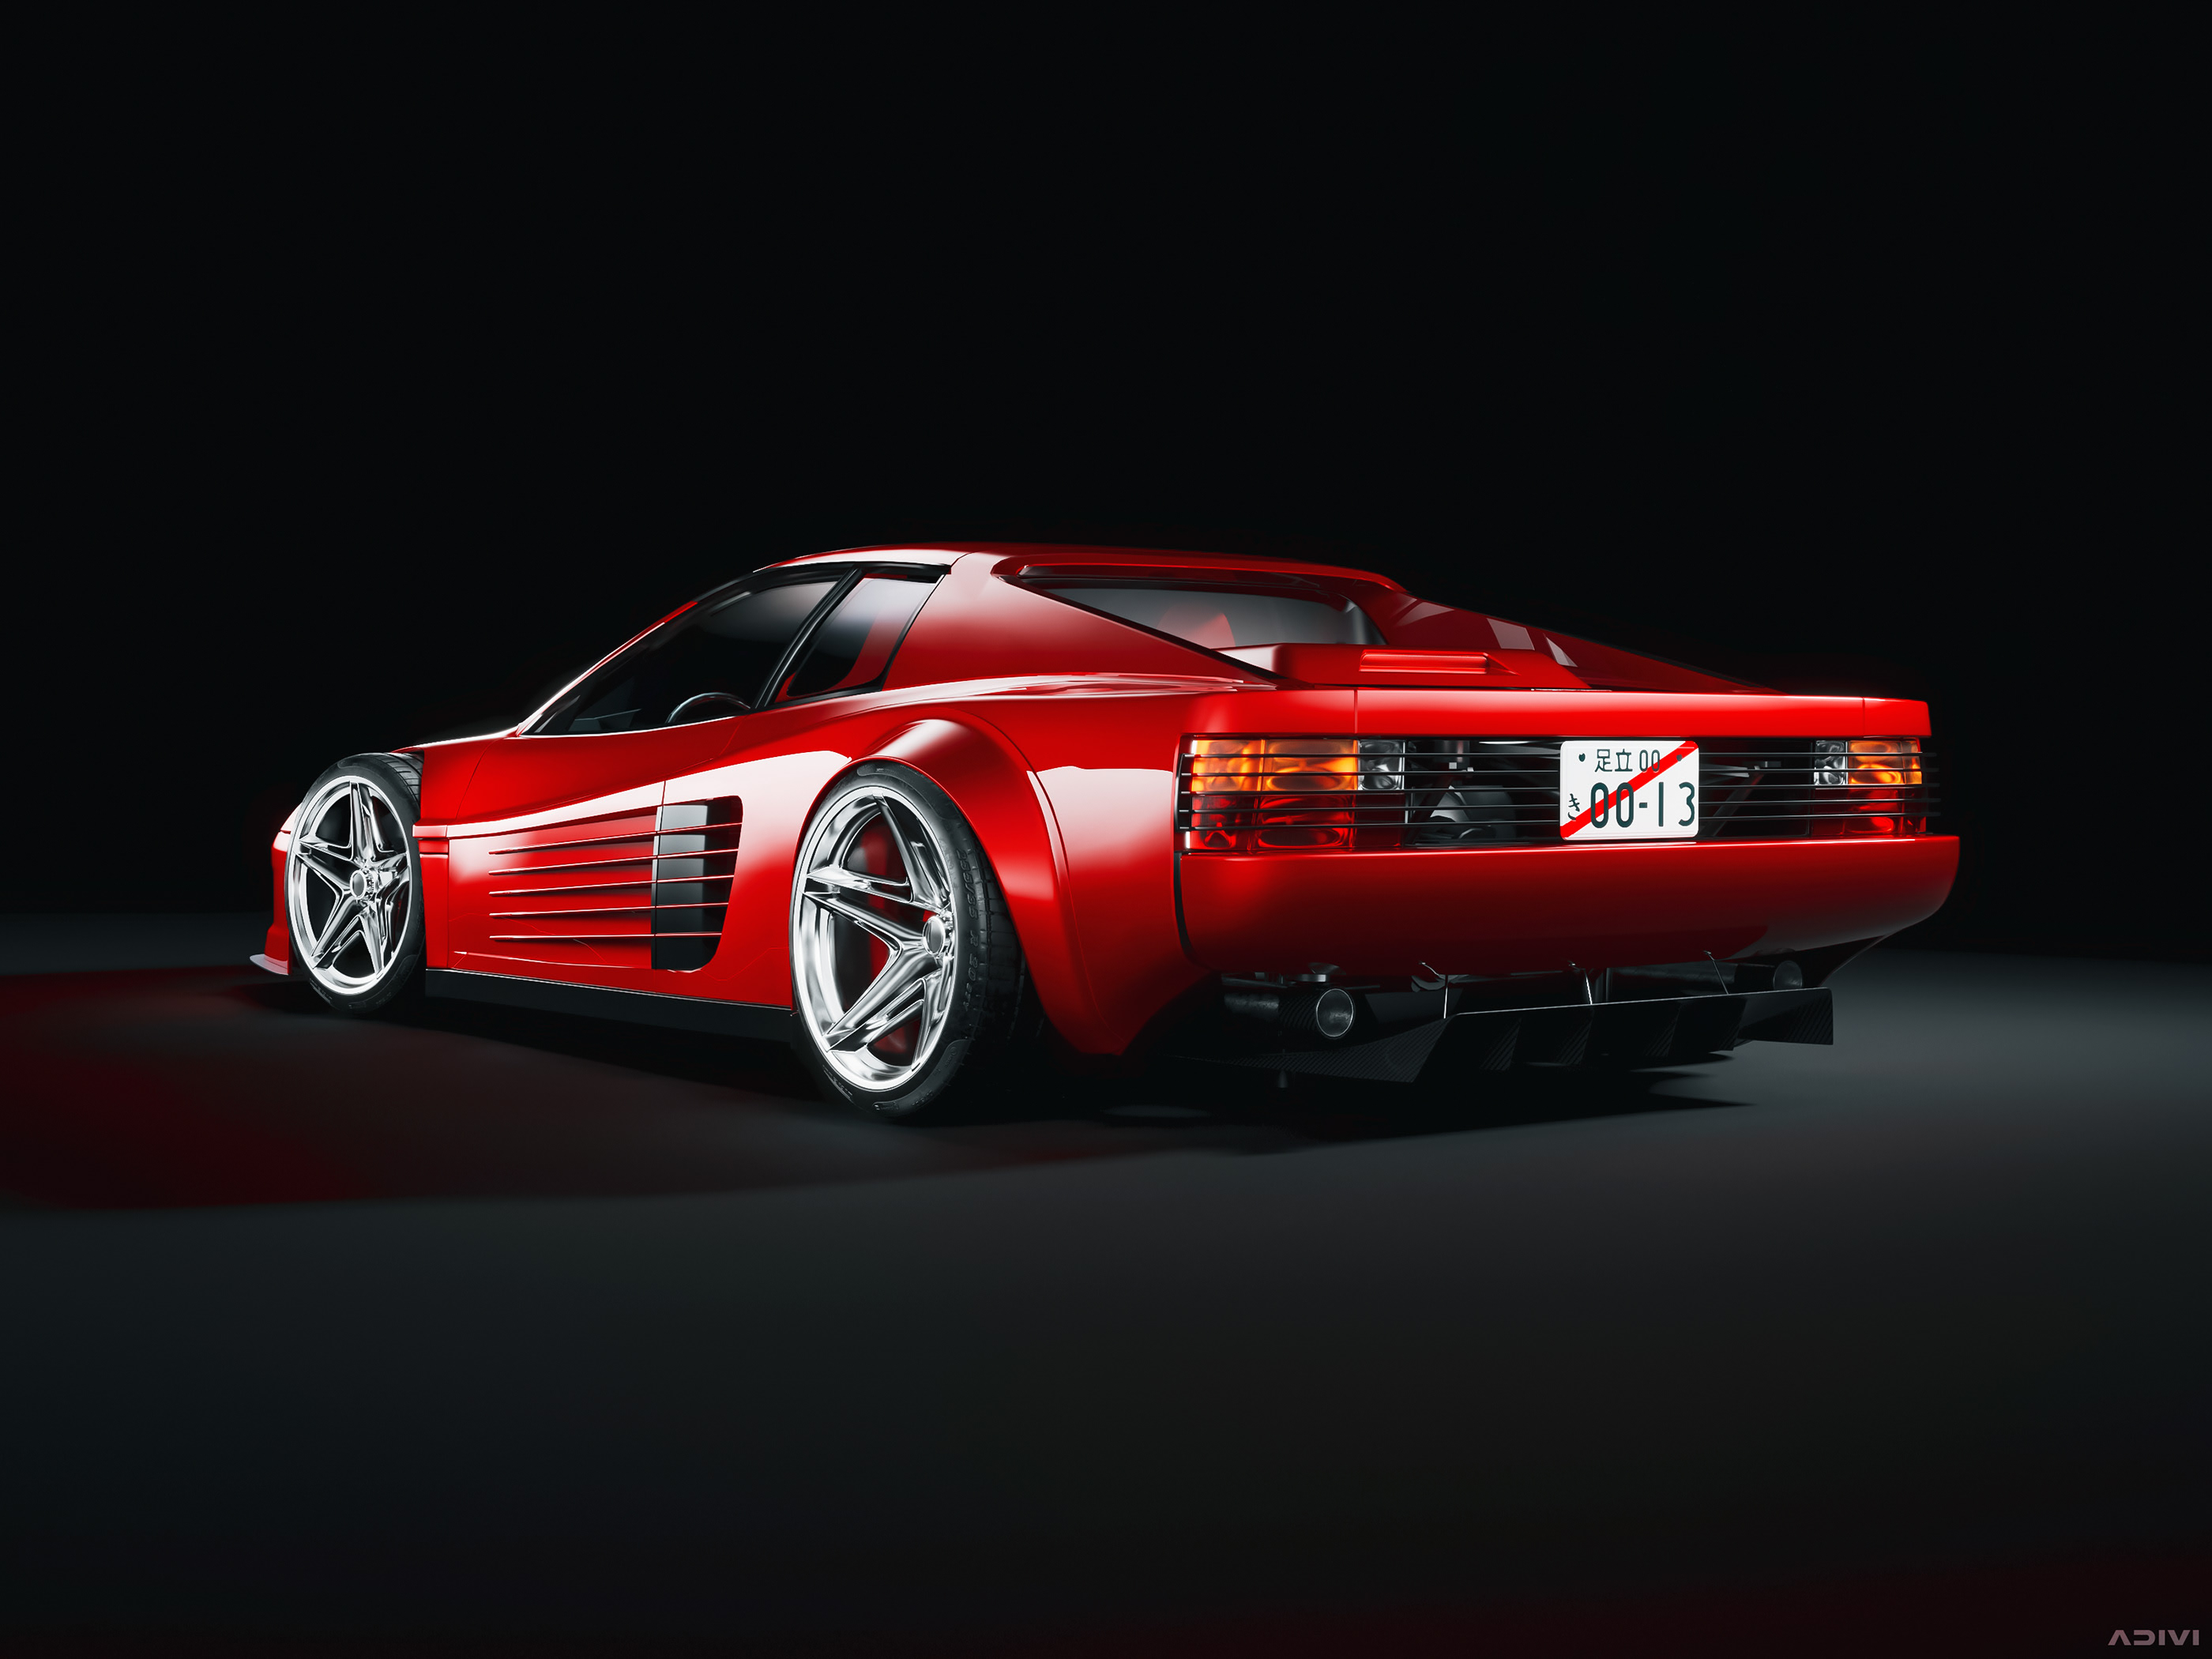 Ferrari Ferrari Testarossa Concept Art Concept Cars Digital Art Digital Render Artwork Red Cars Car  2800x2100